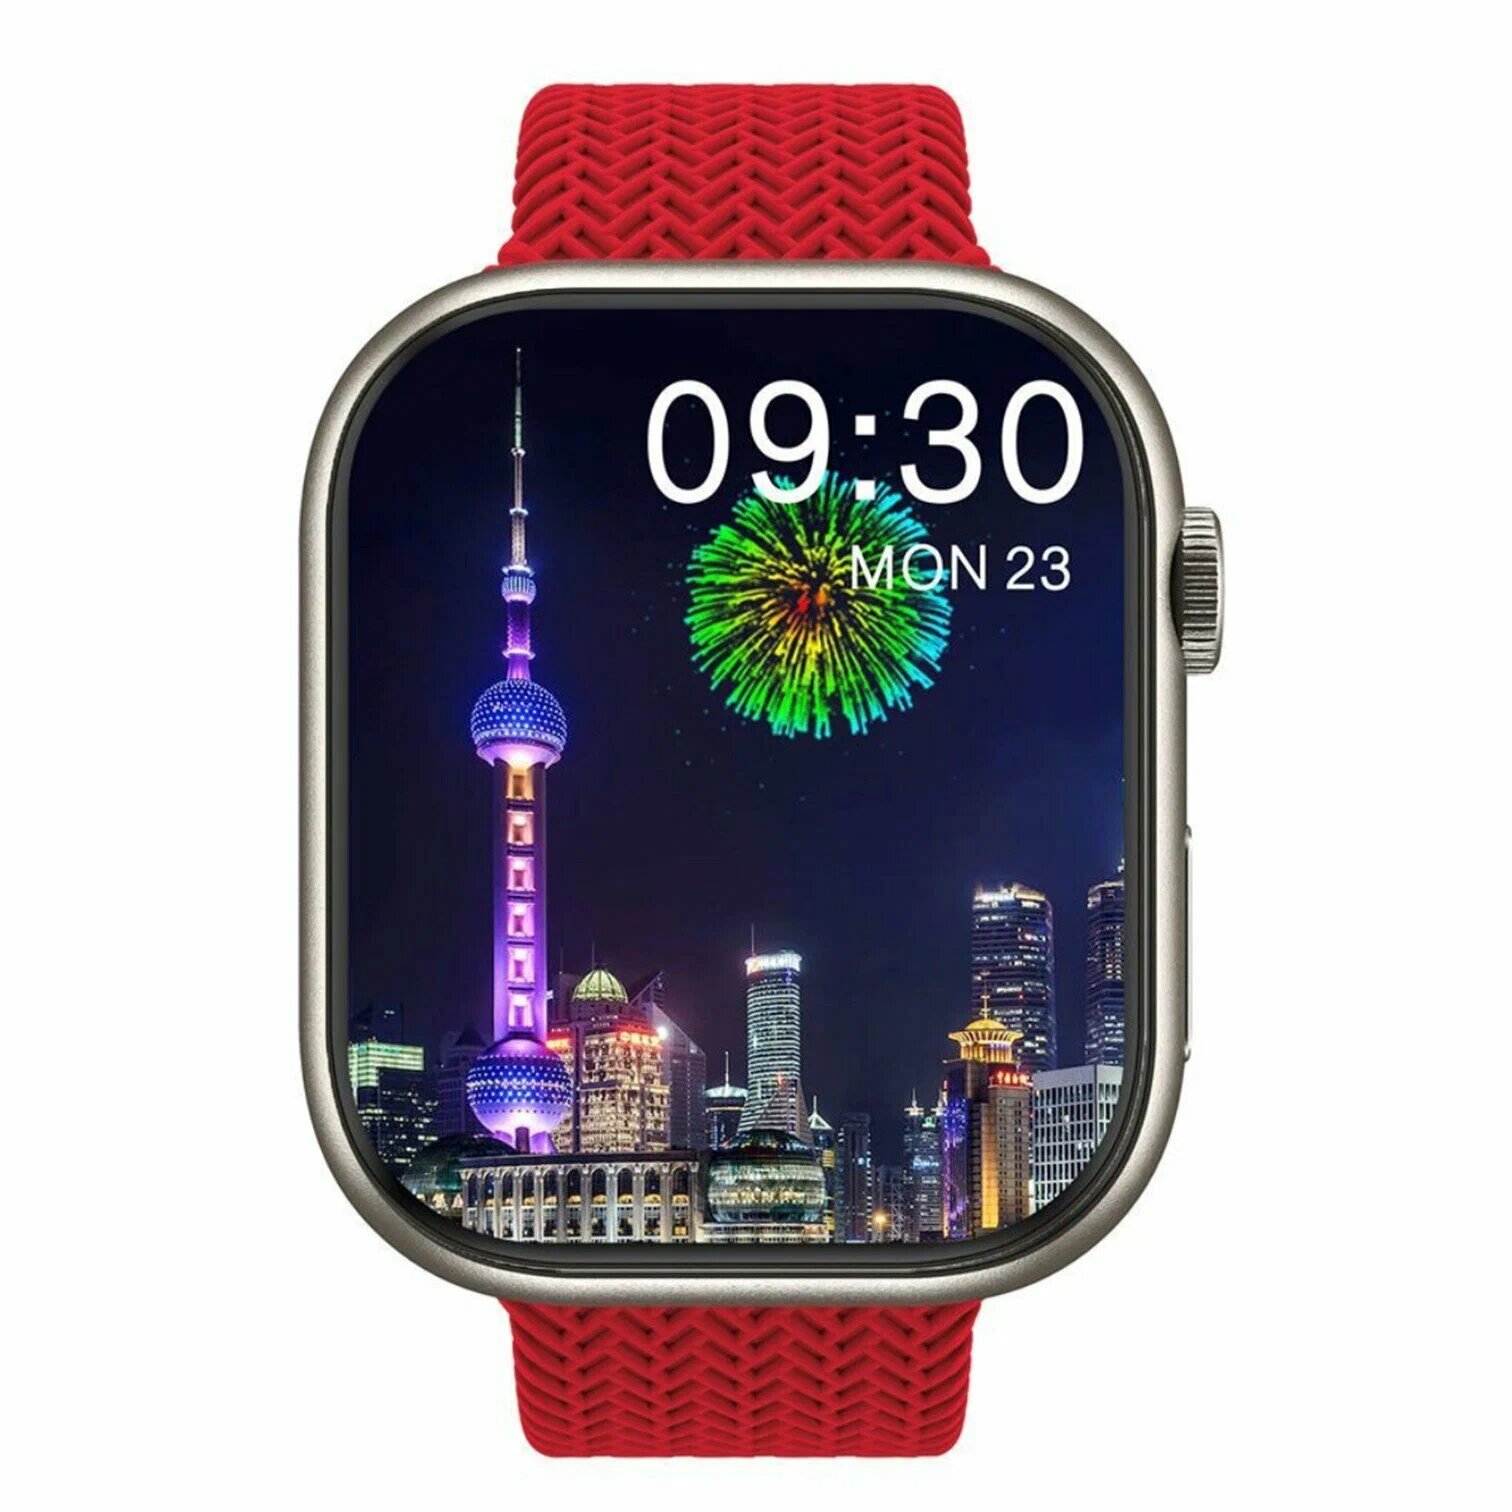 Cмарт часы HK9 PRO PREMIUM Series Smart Watch Amoled Display, iOS, Android, Bluetooth звонки, Уведомления, Красные